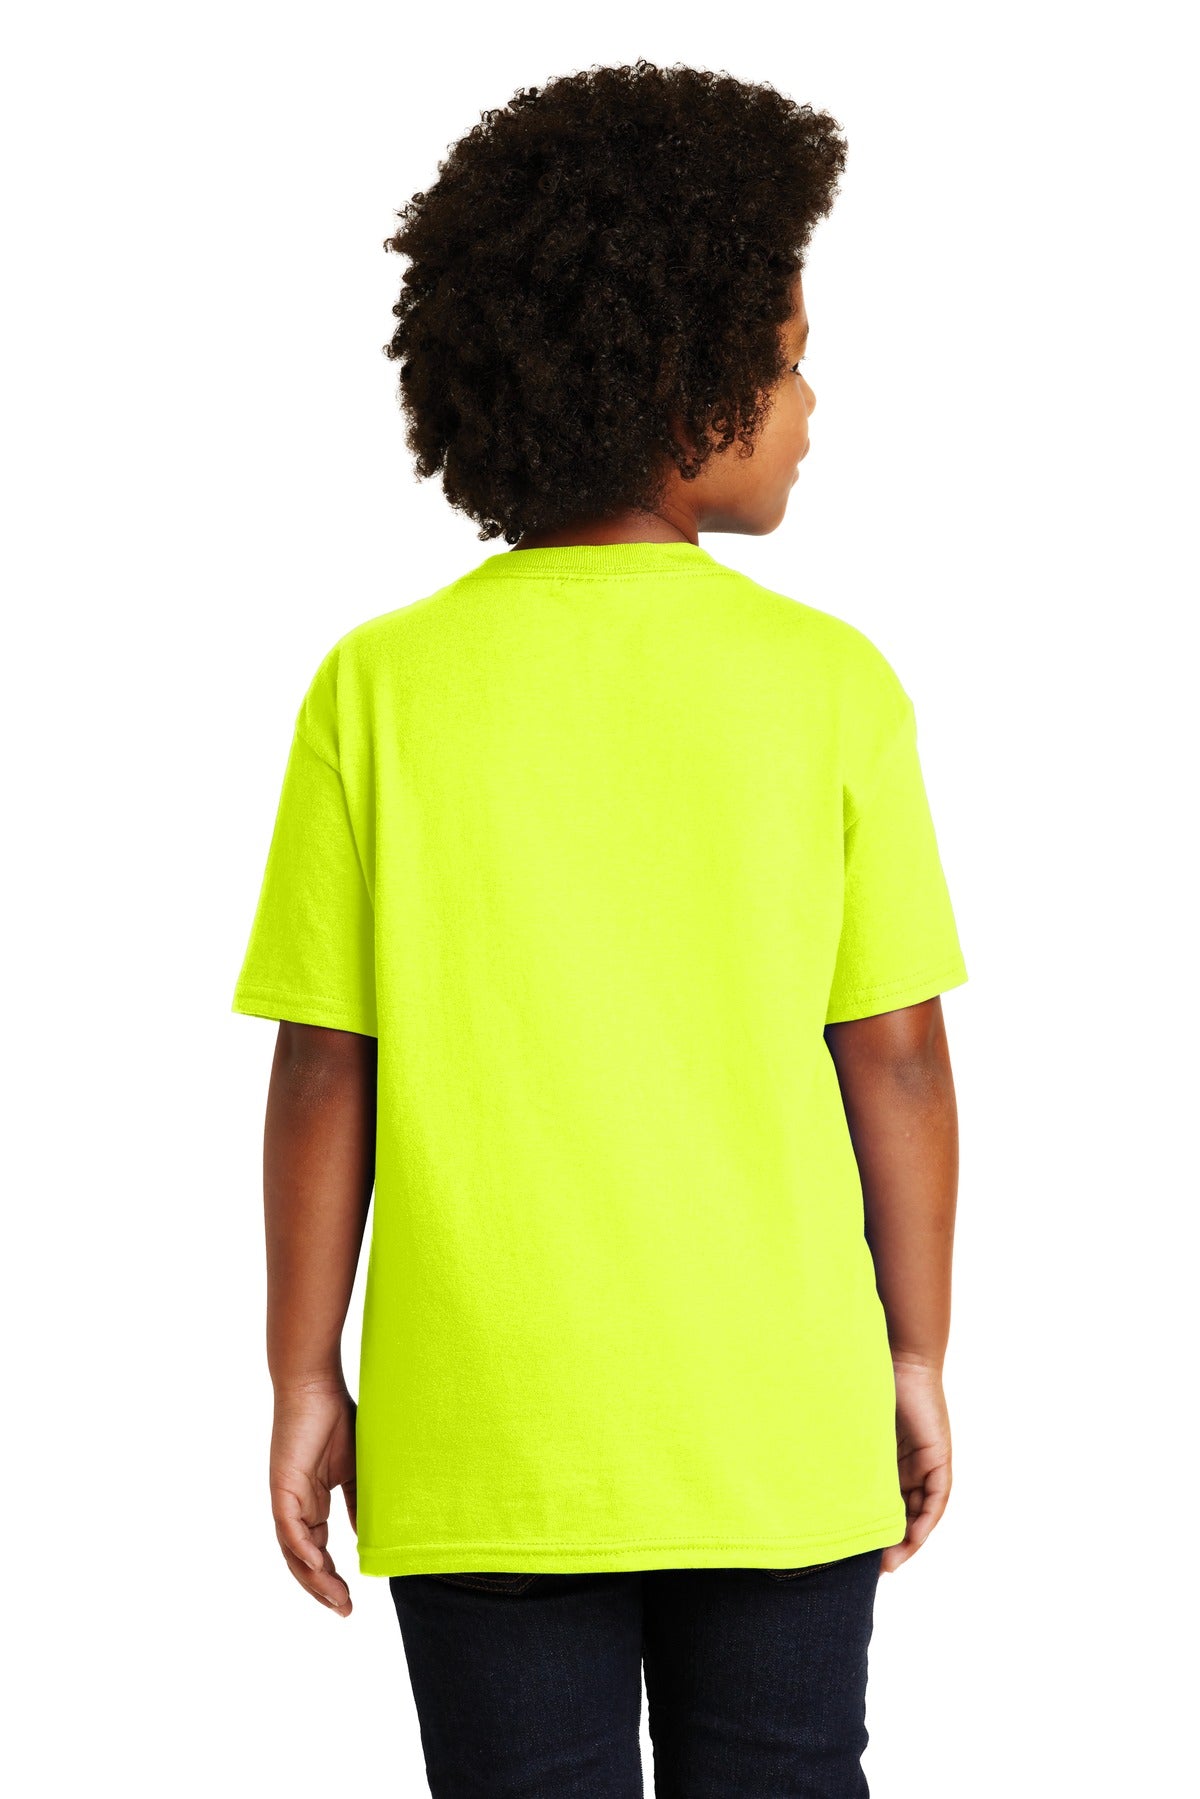 Gildan® - Youth Ultra Cotton®100% US Cotton T-Shirt. 2000B [Safety Green] - DFW Impression